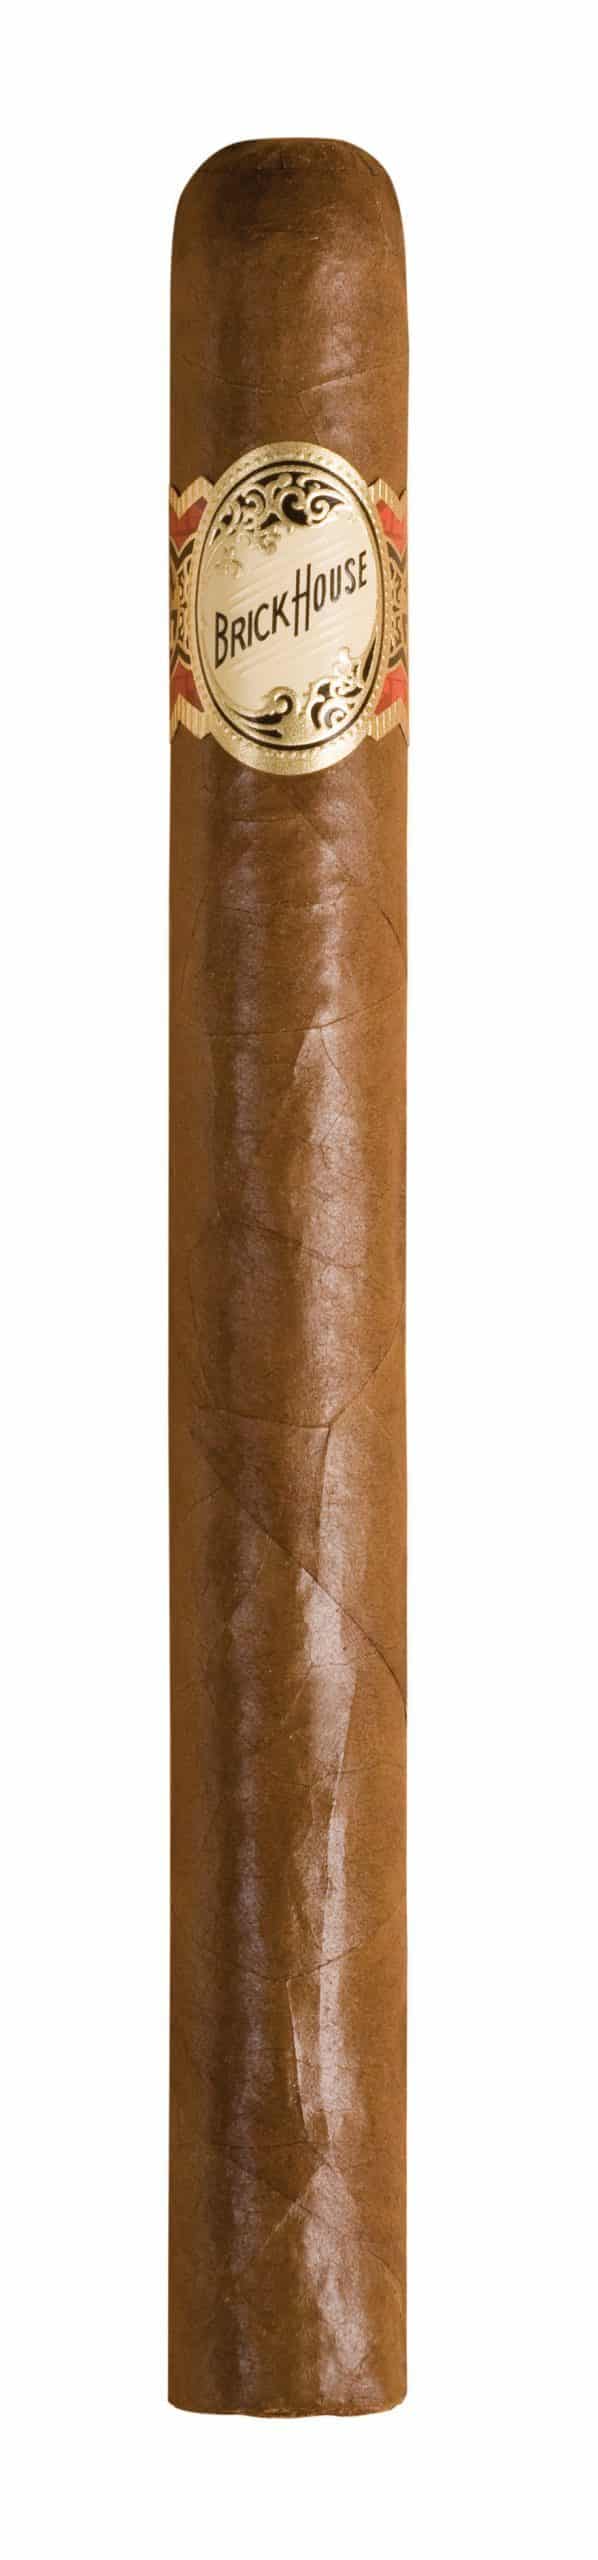 single brick house churchill cigar